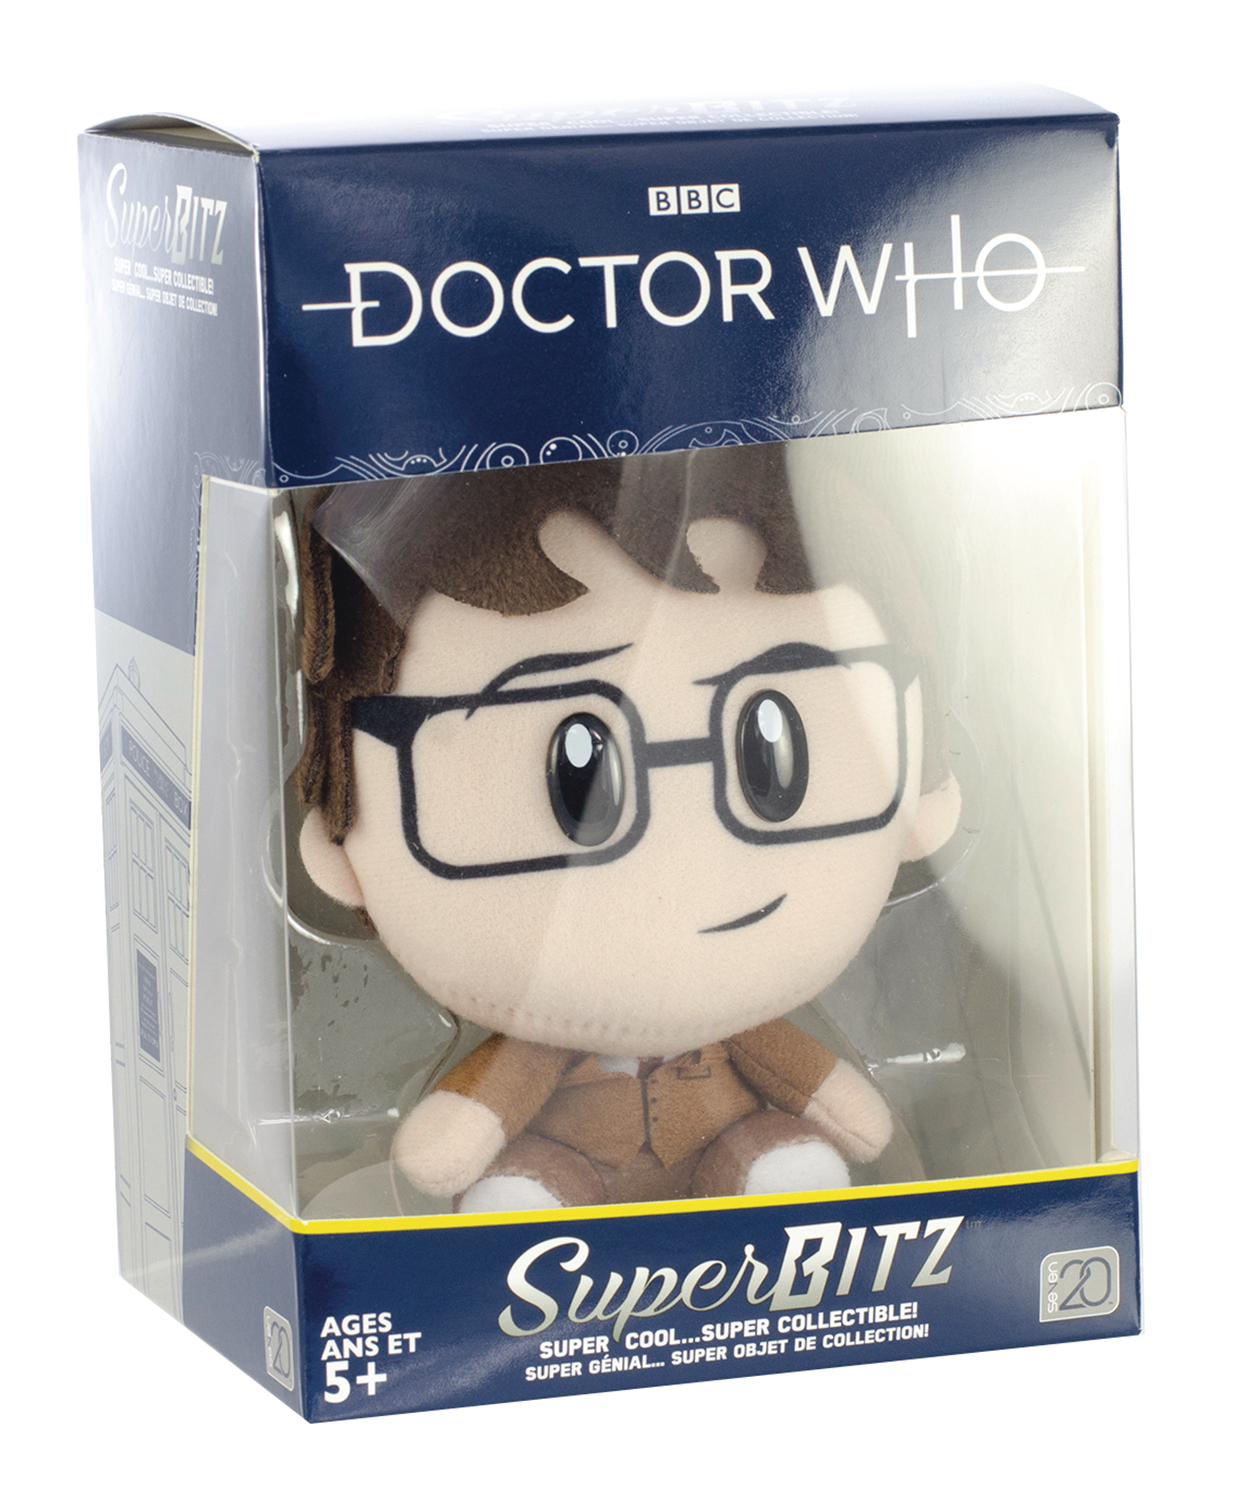 BBC Doctor Who 10th 10 th Doctor Superbitz Mini Collectible Plush 